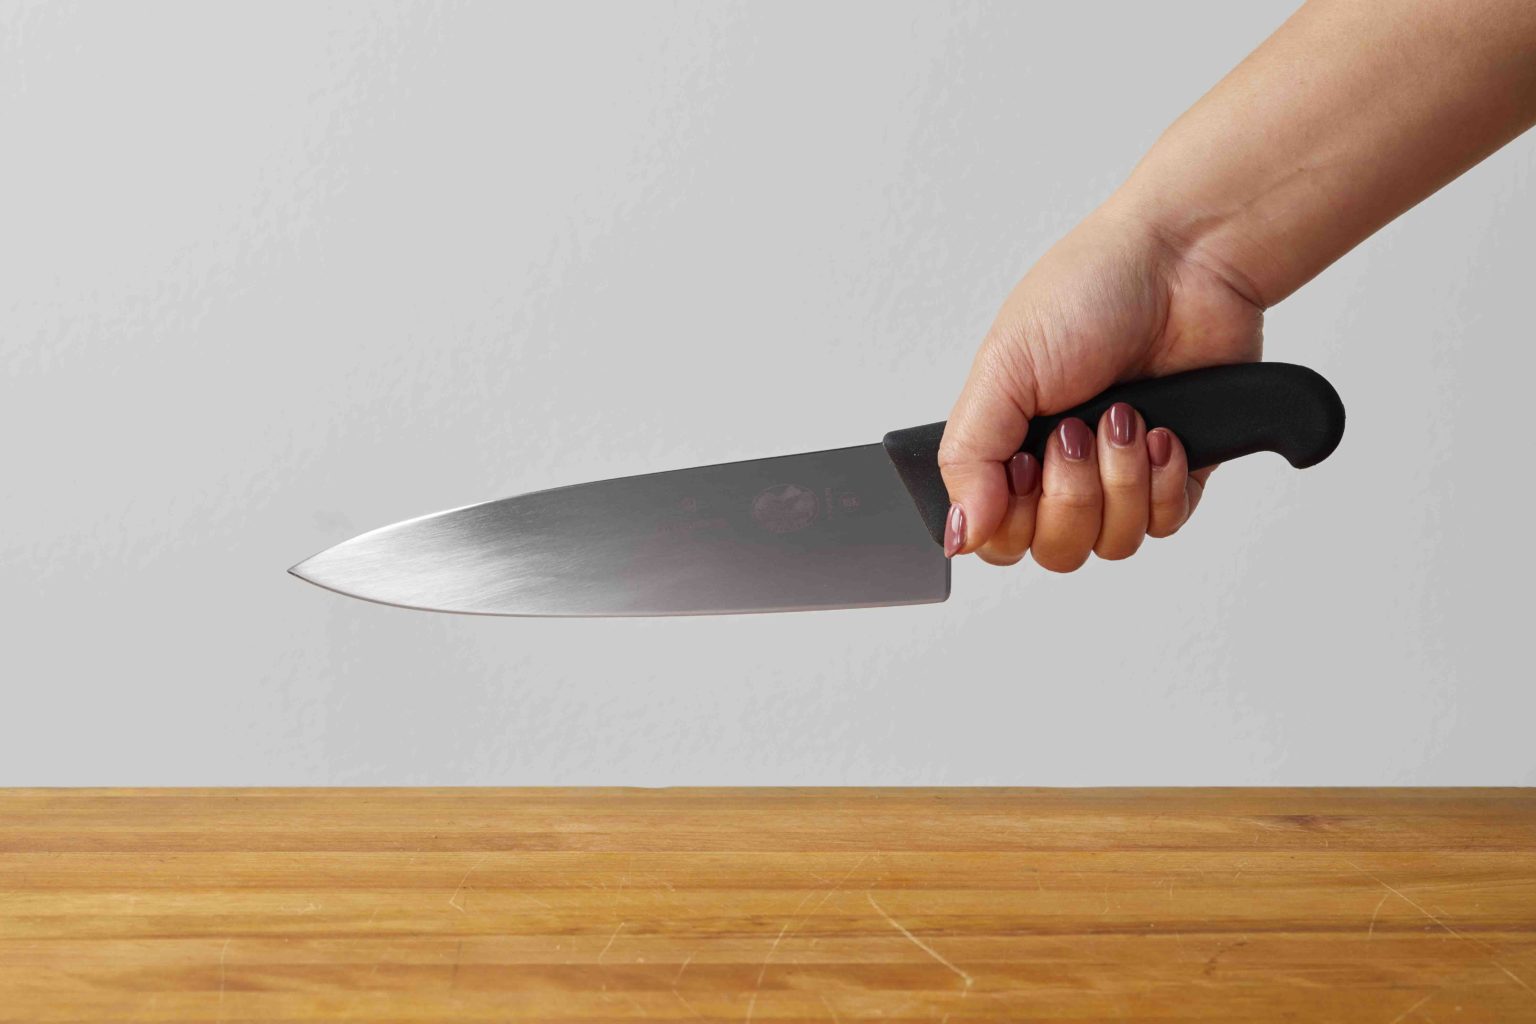 knife skills essay